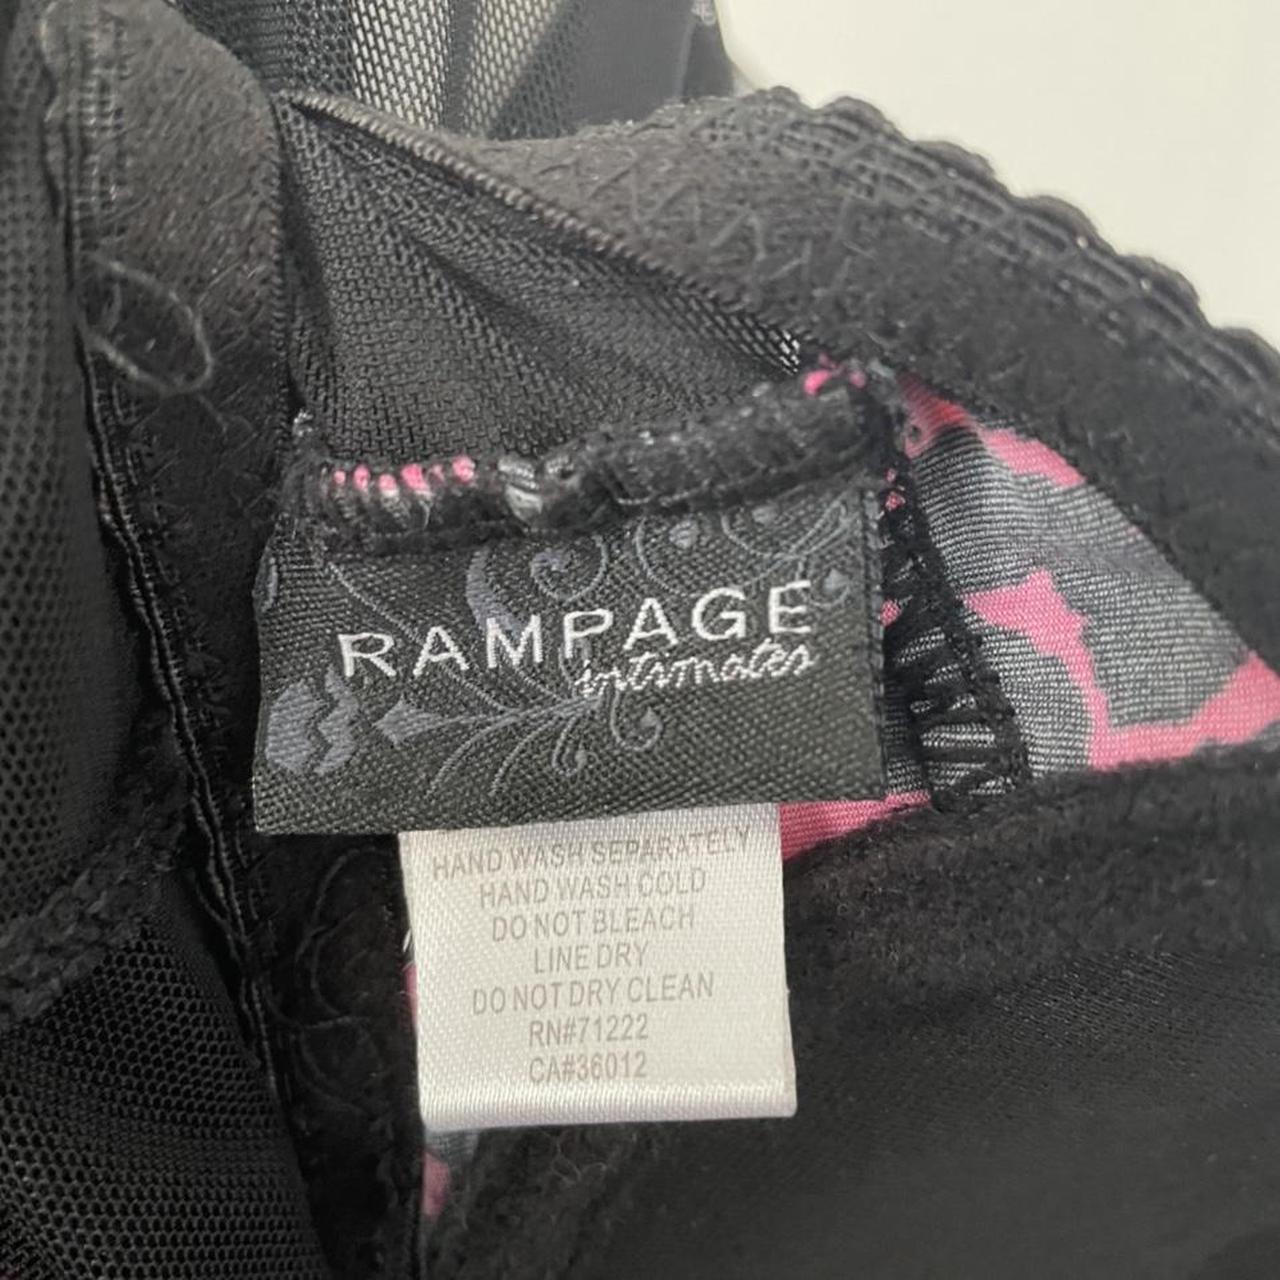 Rampage Intimates Dark pink leopard 🐆 with mesh on... - Depop